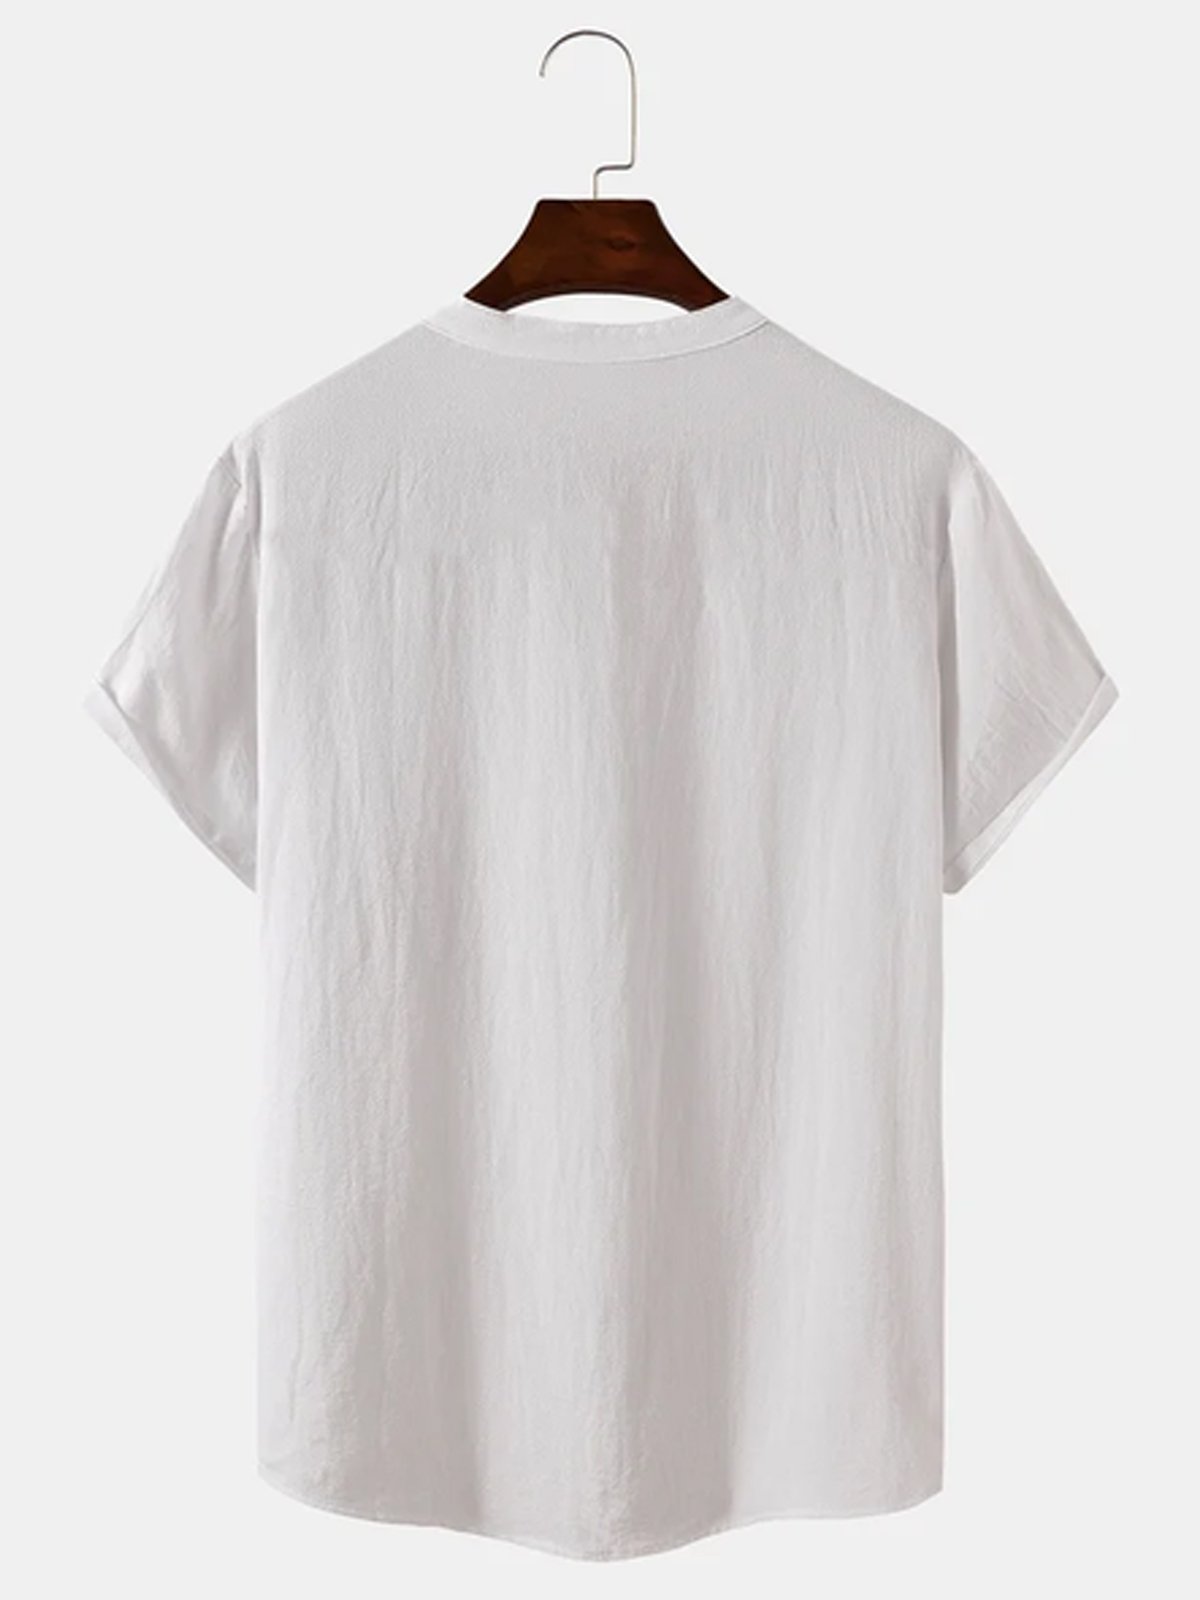 Cotton Linen Vintage Hawaiian Vacation Short Sleeve Shirt